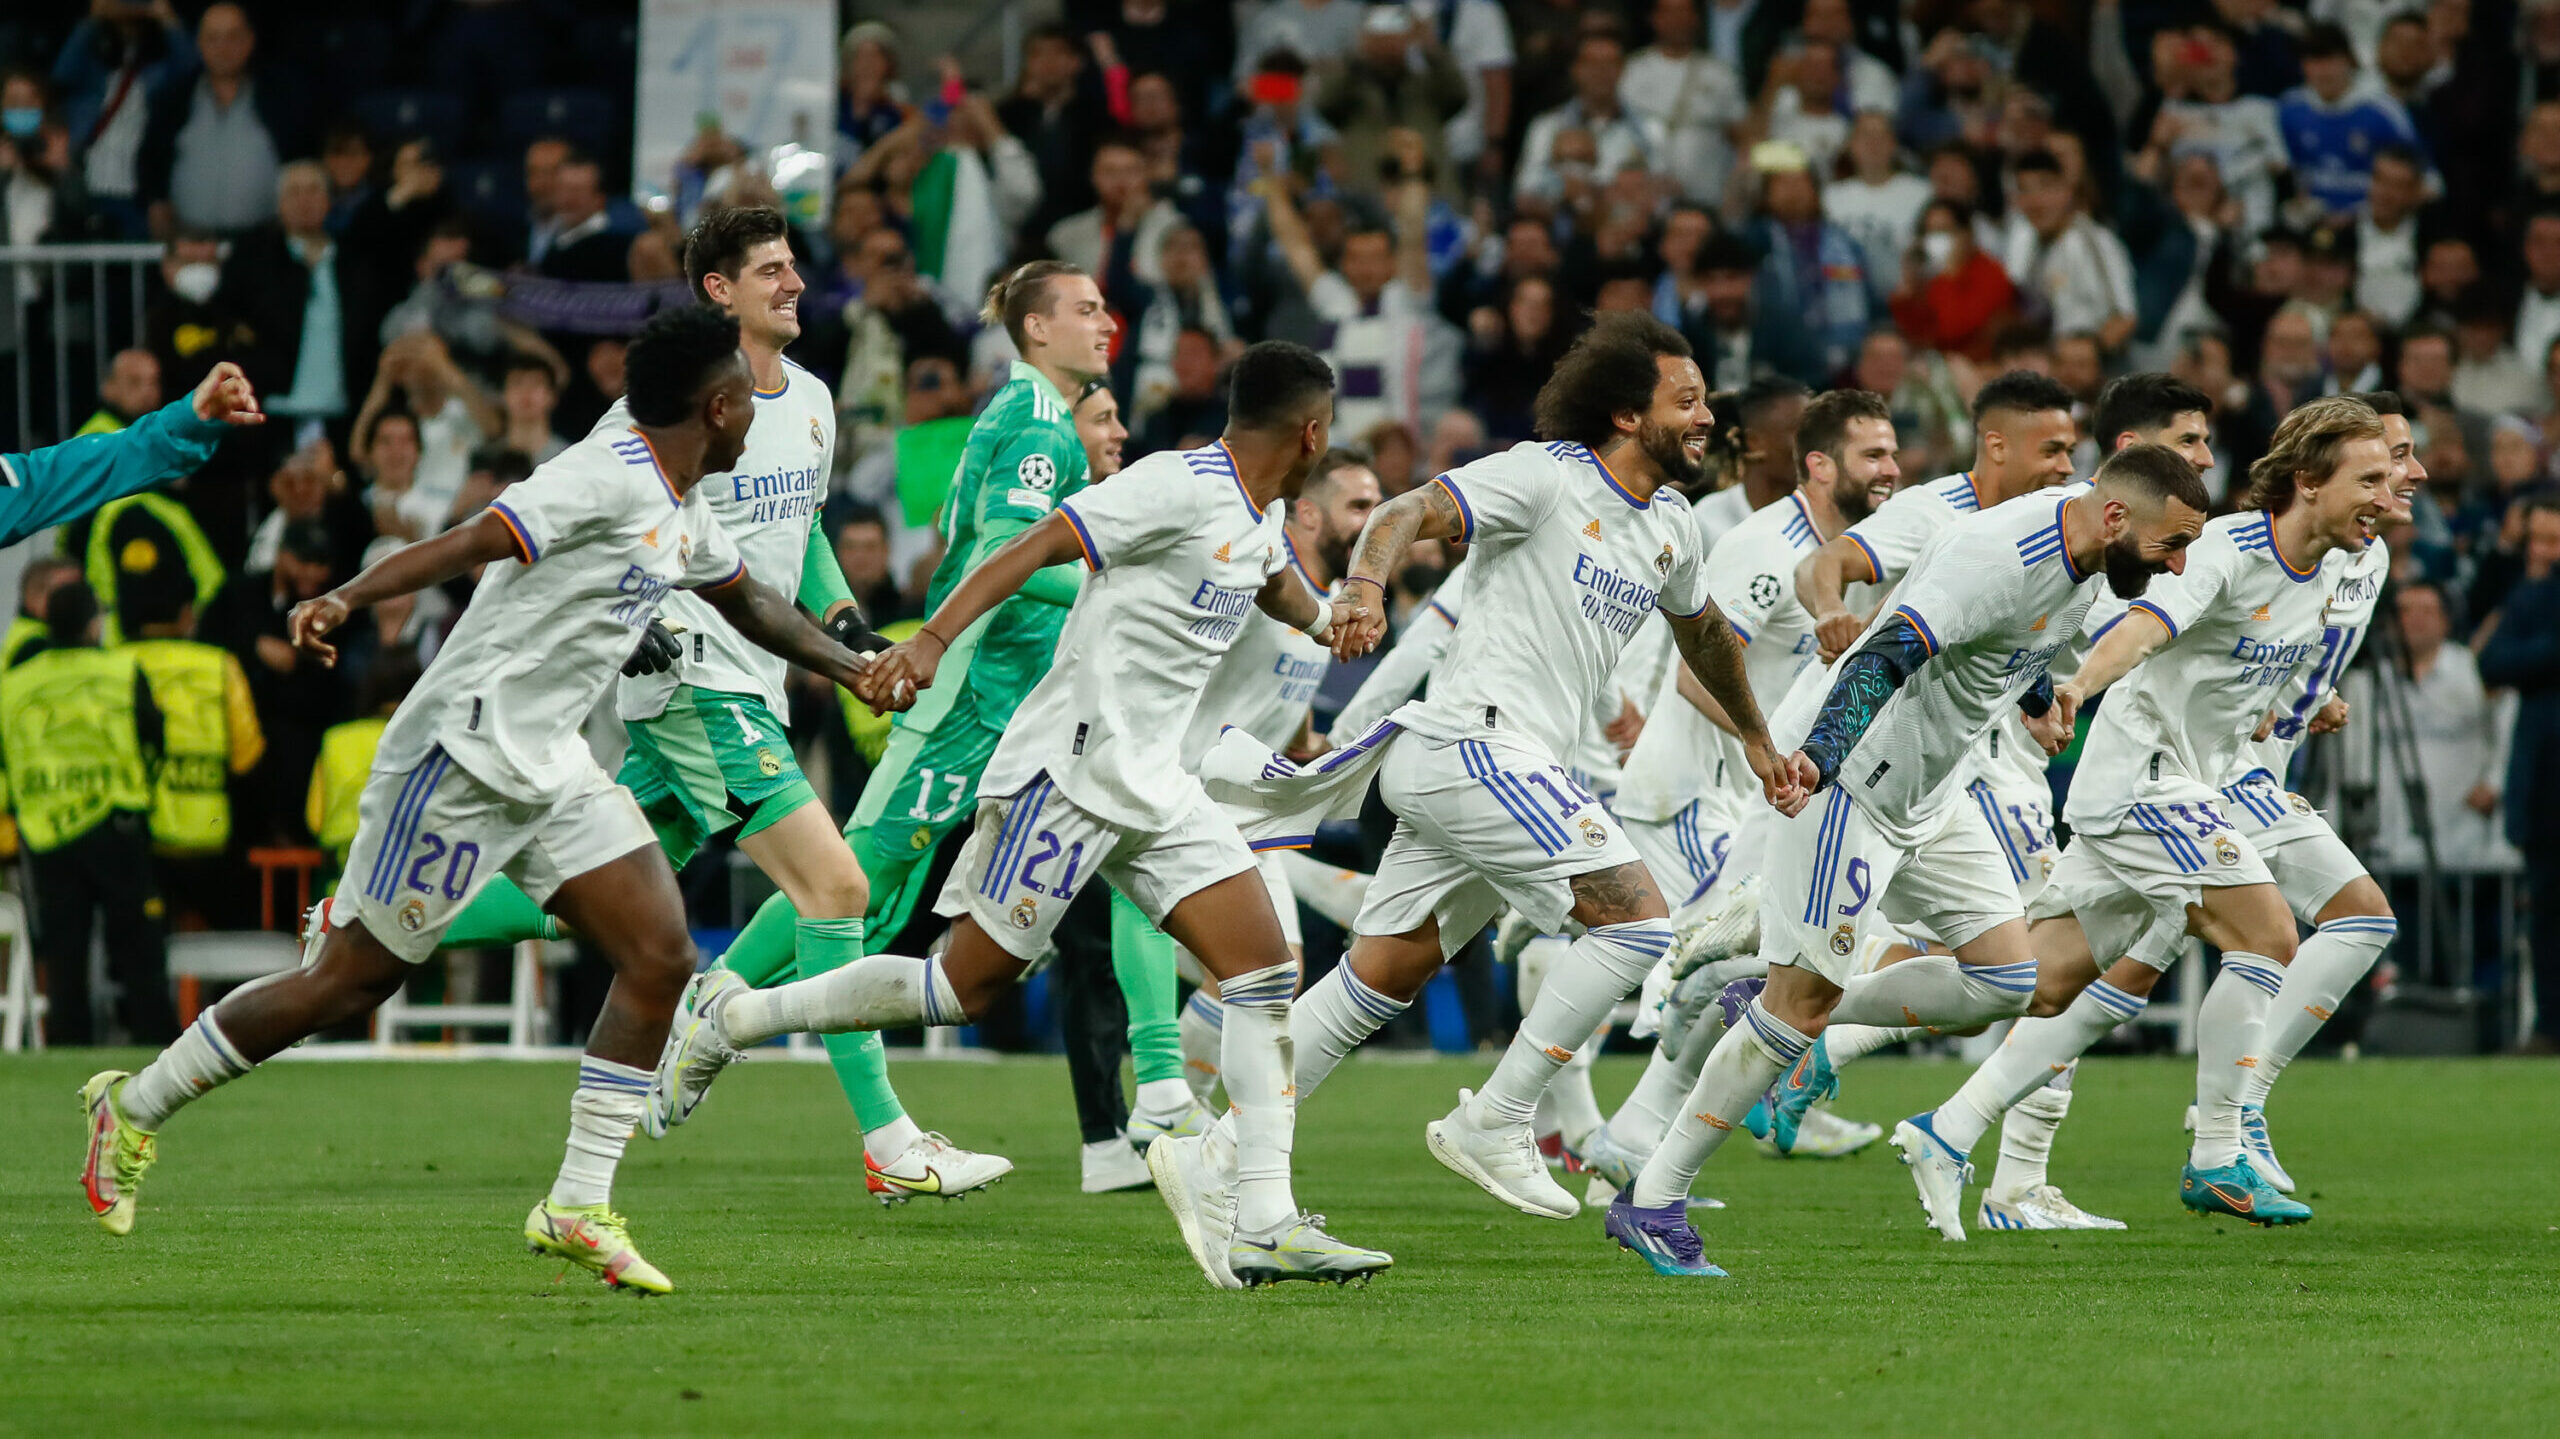 El Real Madrid llega a la final de la Liga de Campeones tras eliminar al  Manchester